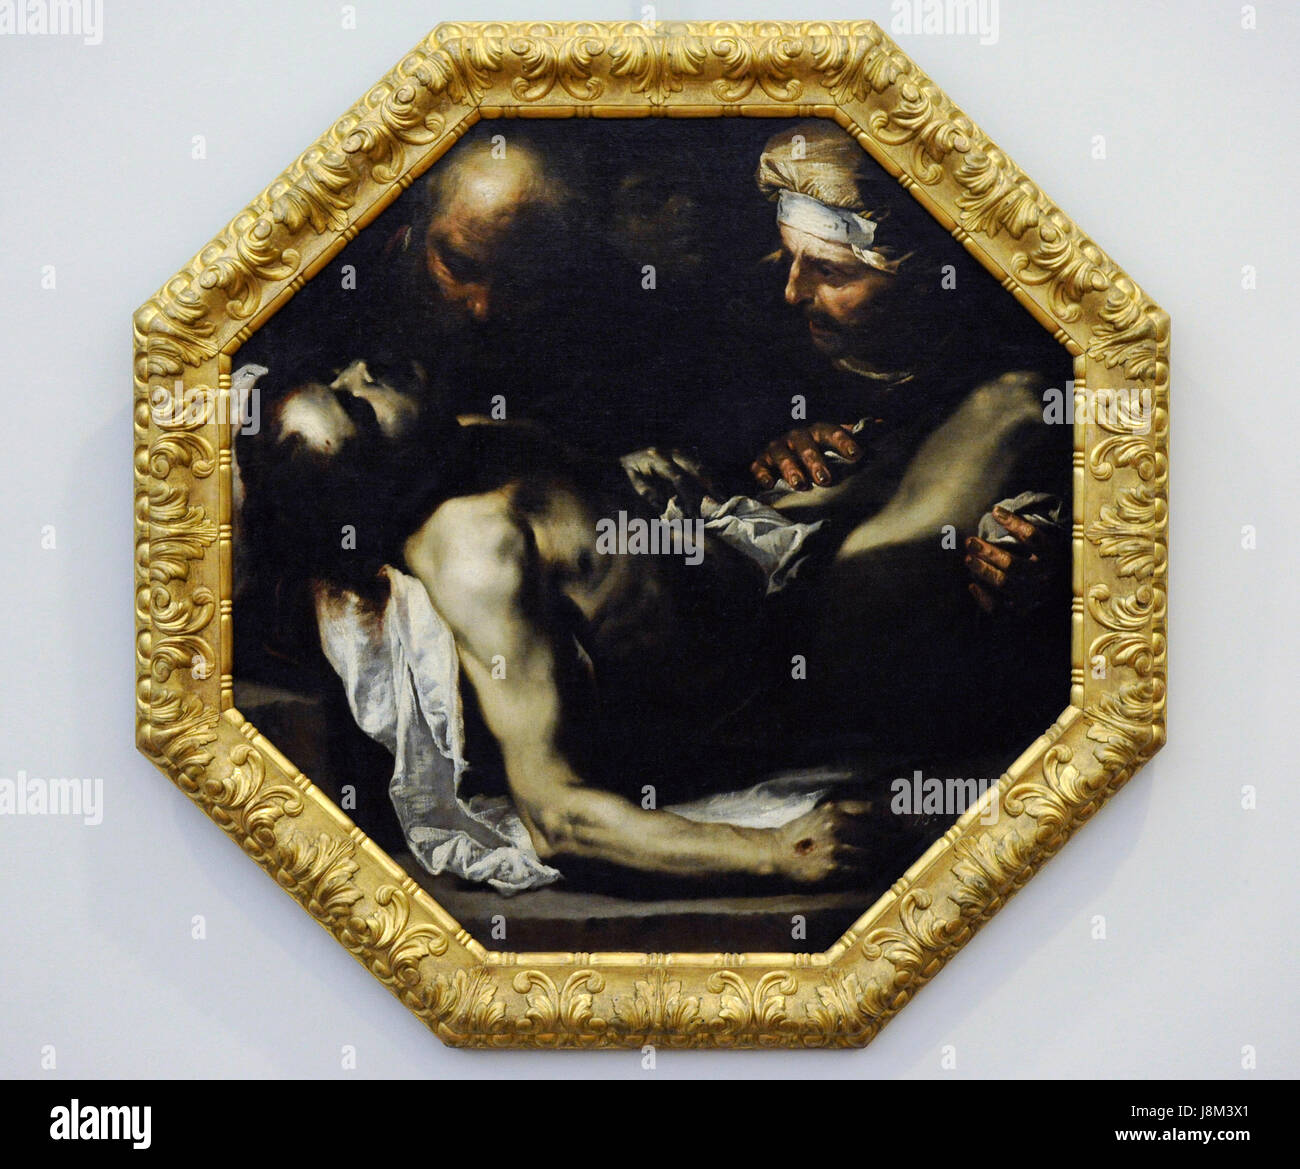 Luca Giordano (1634-1705). Pintor italiano. Cristo depuesto, 1663. Óleo sobre lienzo. Museo Nacional de Capodimonte. Nápoles. Italia. Foto de stock